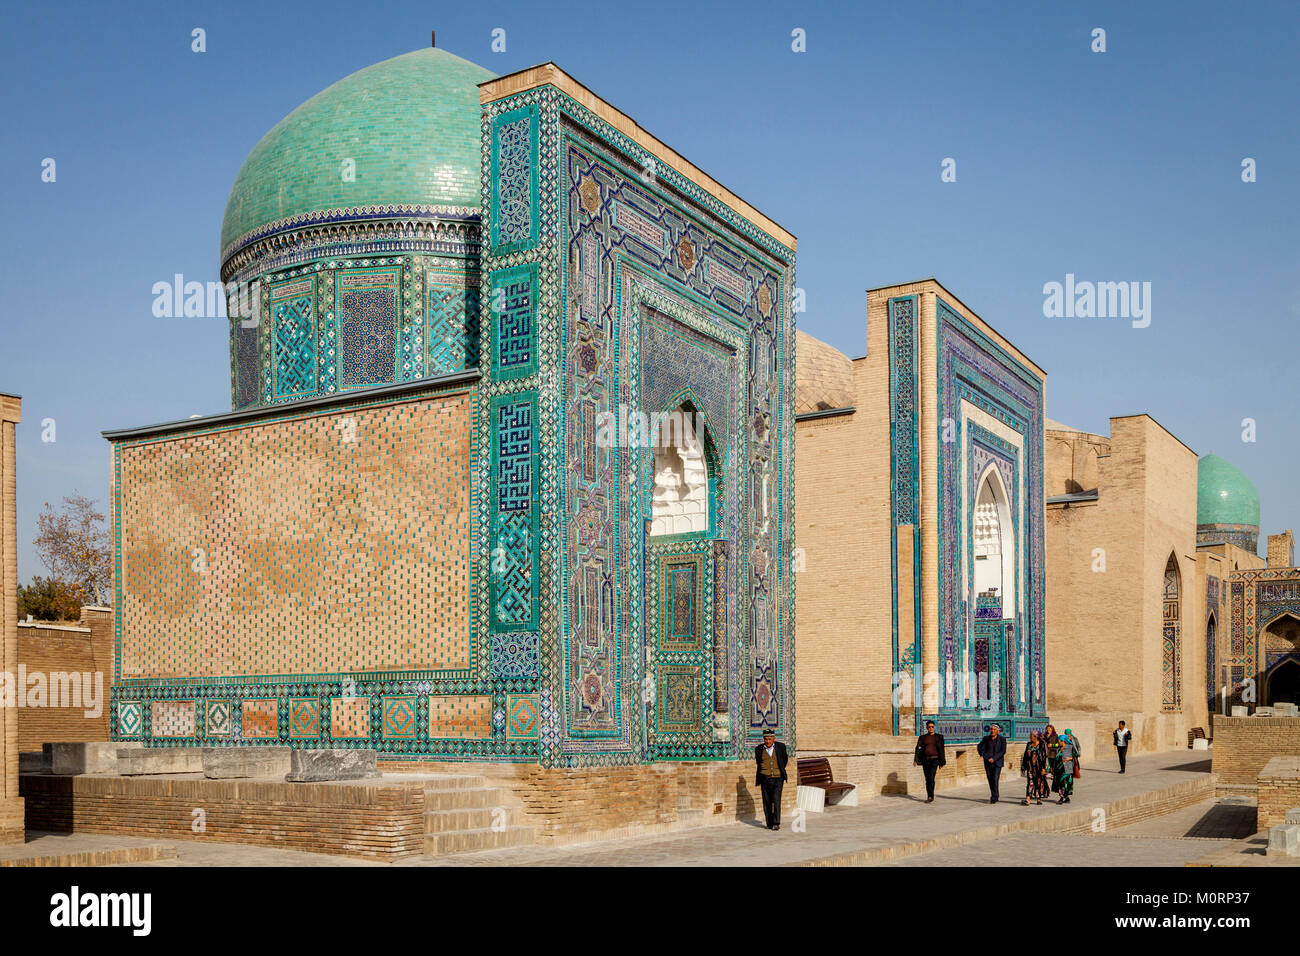 The Avenue Of Mausoleums, The Shah-i-Zinda Mausoleum Complex, Samarkand, Uzbekistan Stock Photo